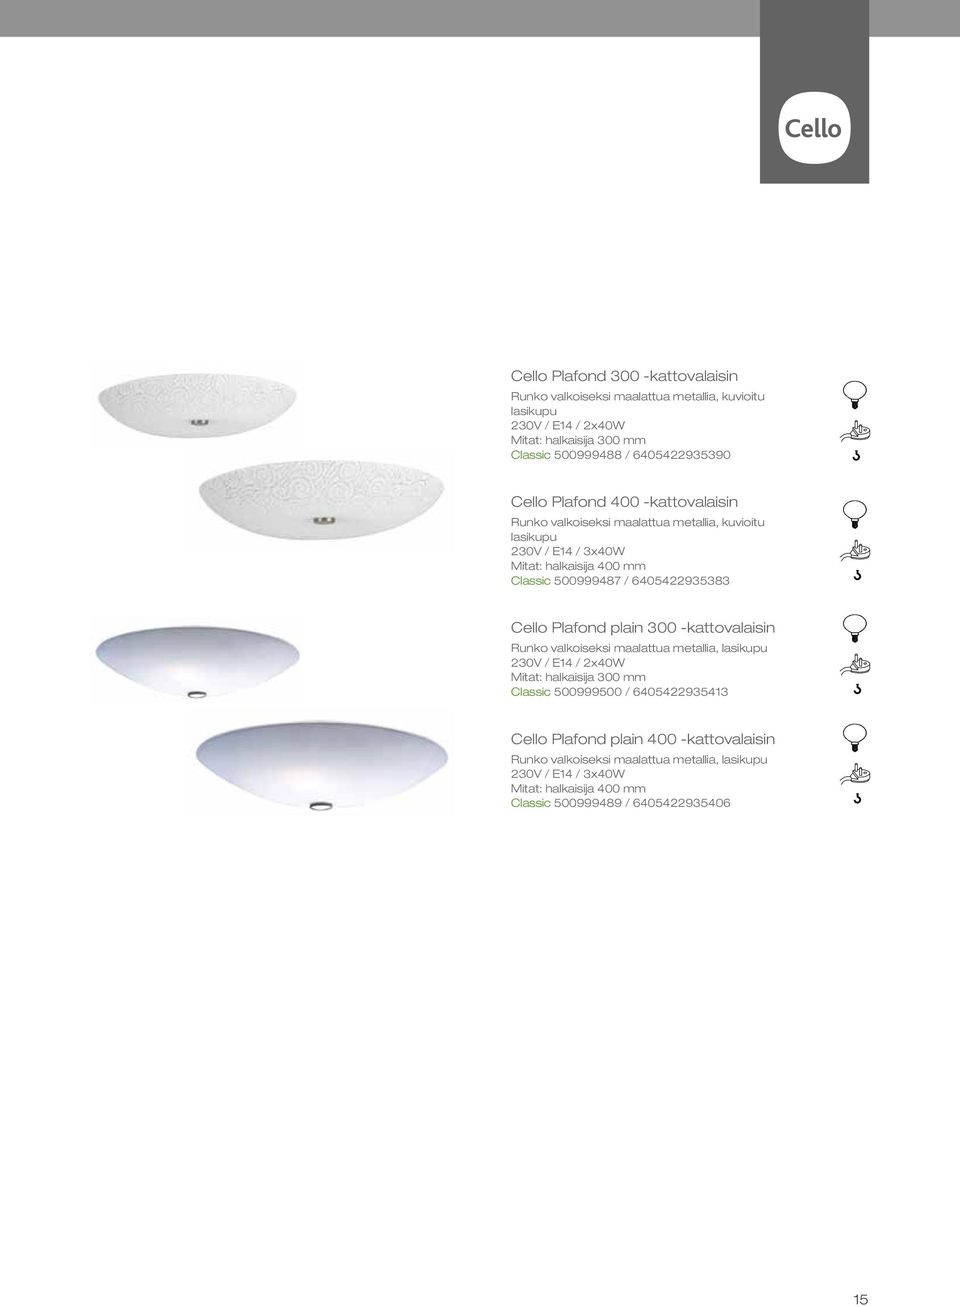 / 6405422935383 Cello Plafond plain 300 -kattovalaisin Runko valkoiseksi maalattua metallia, lasikupu 230V / E14 / 2x40W Mitat: halkaisija 300 mm Classic 500999500 /